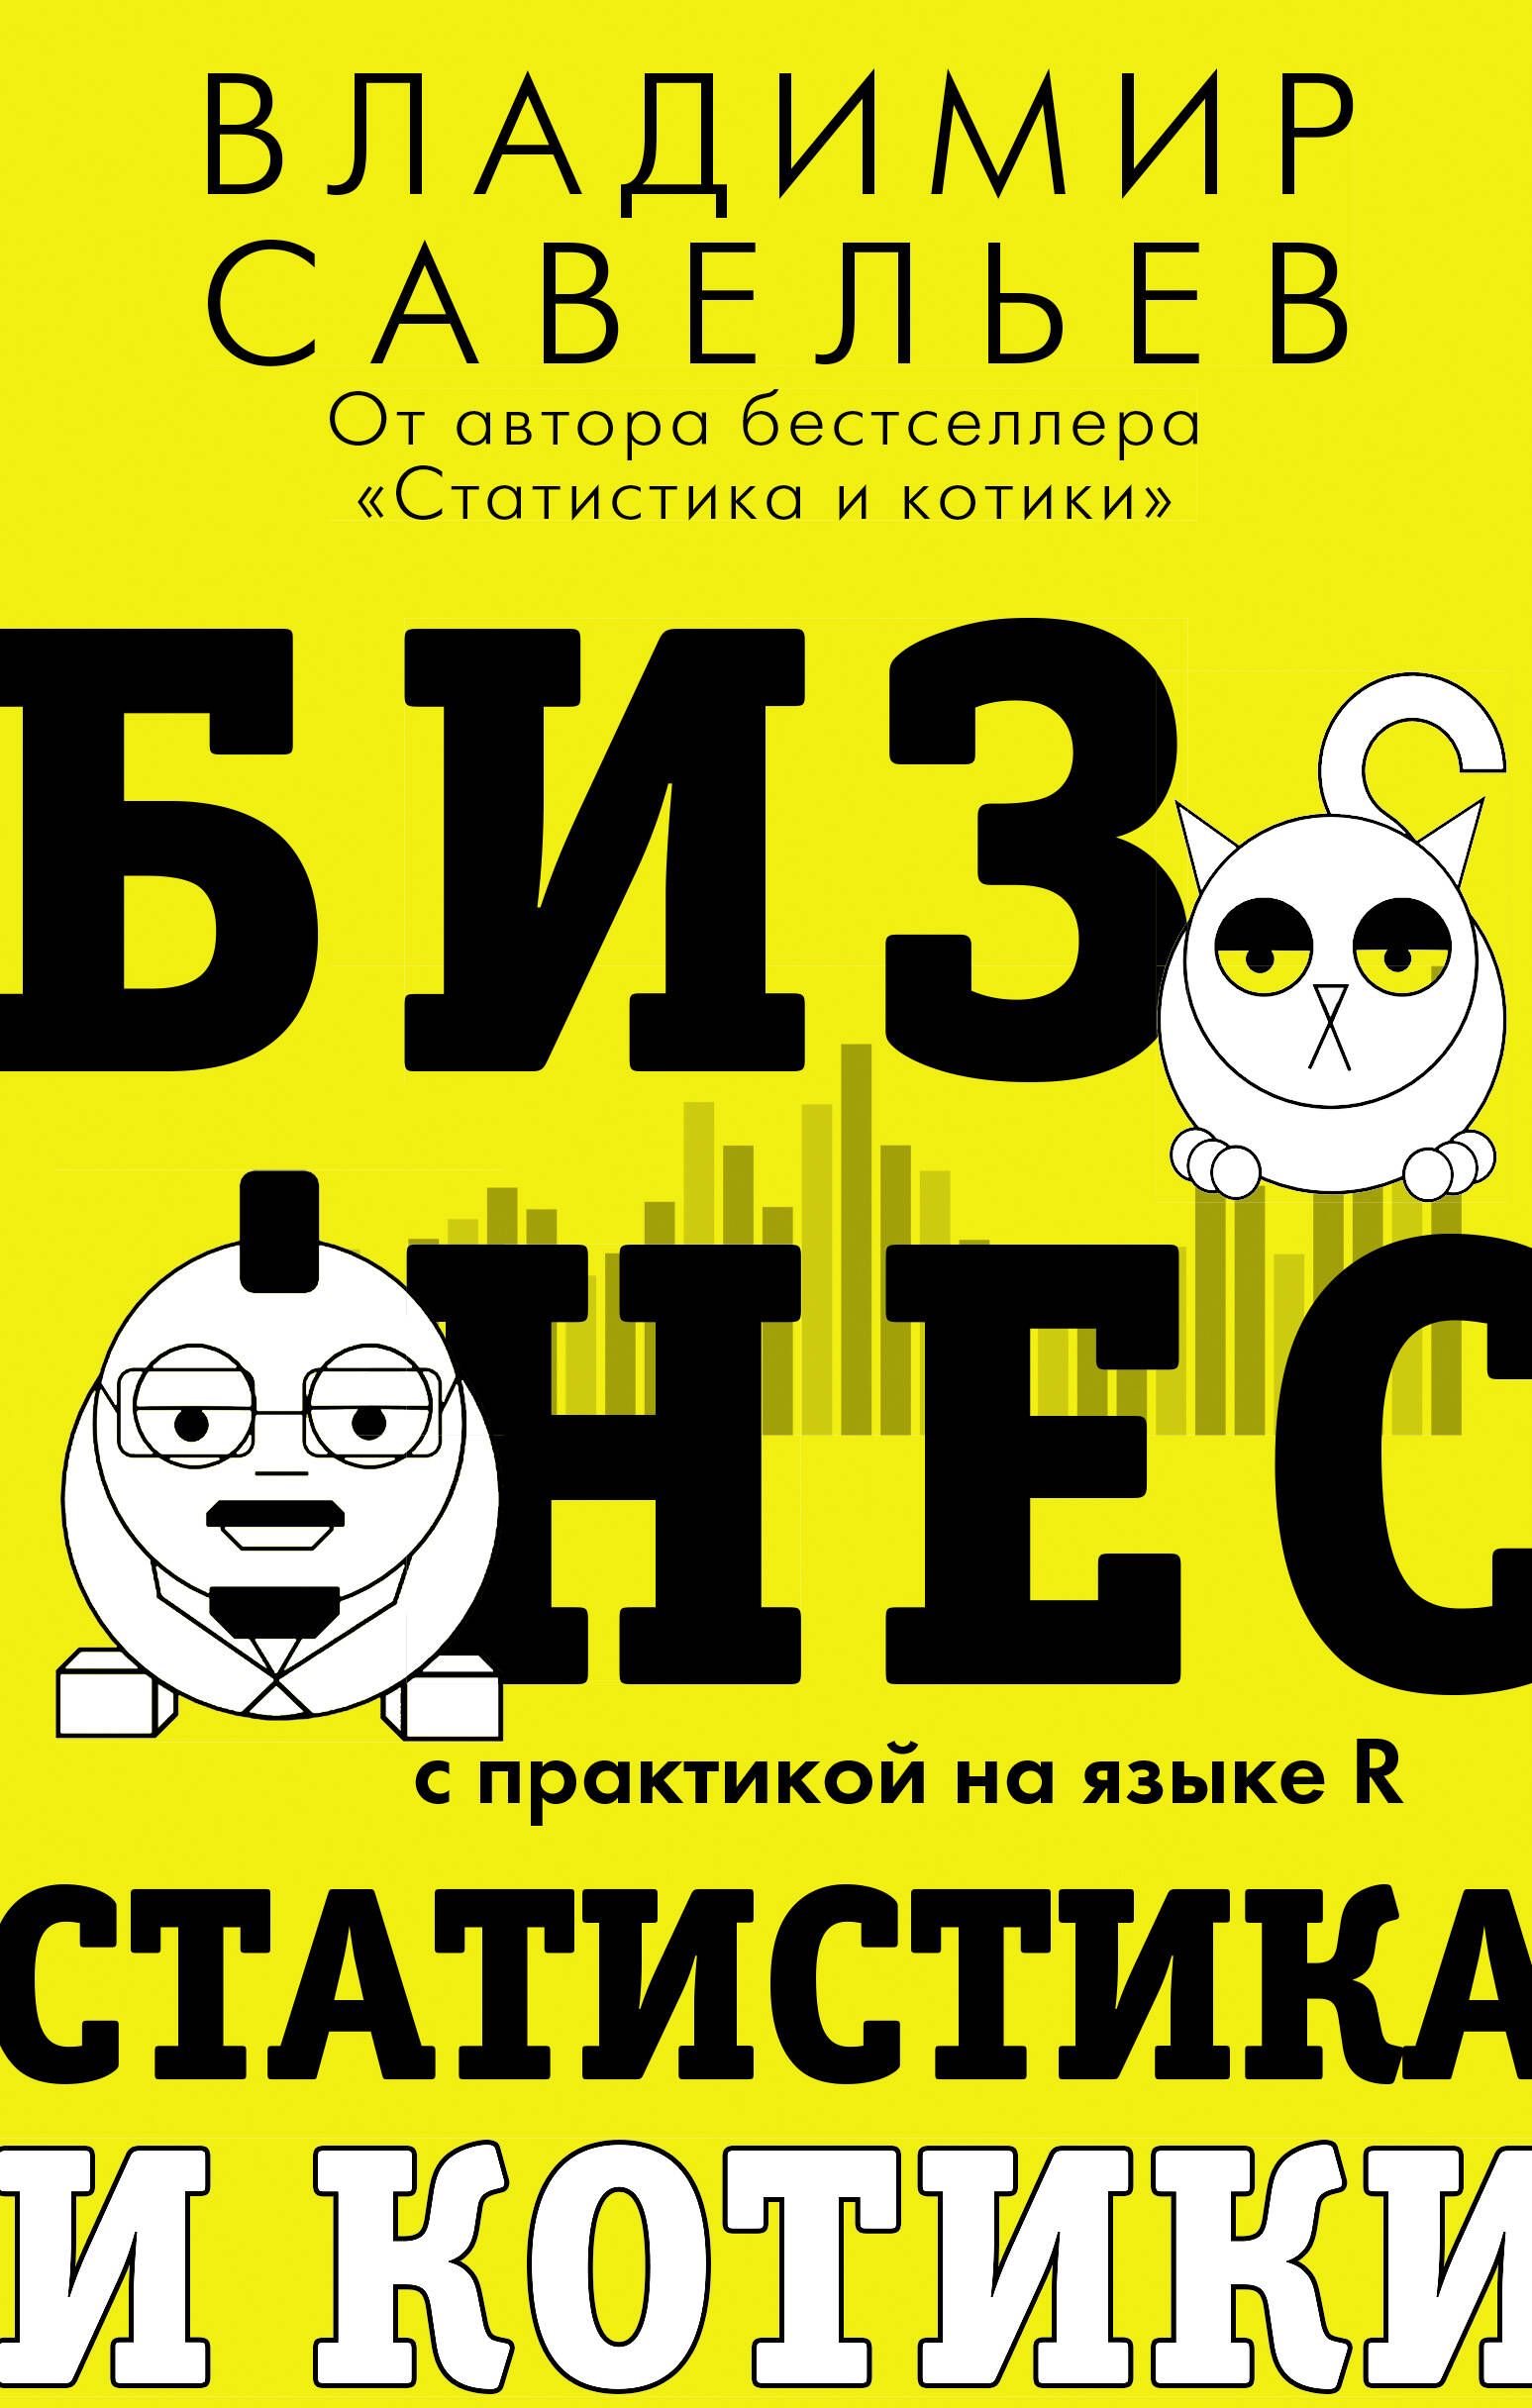 Савельев Владимир Бизнес, статистика и котики - страница 0